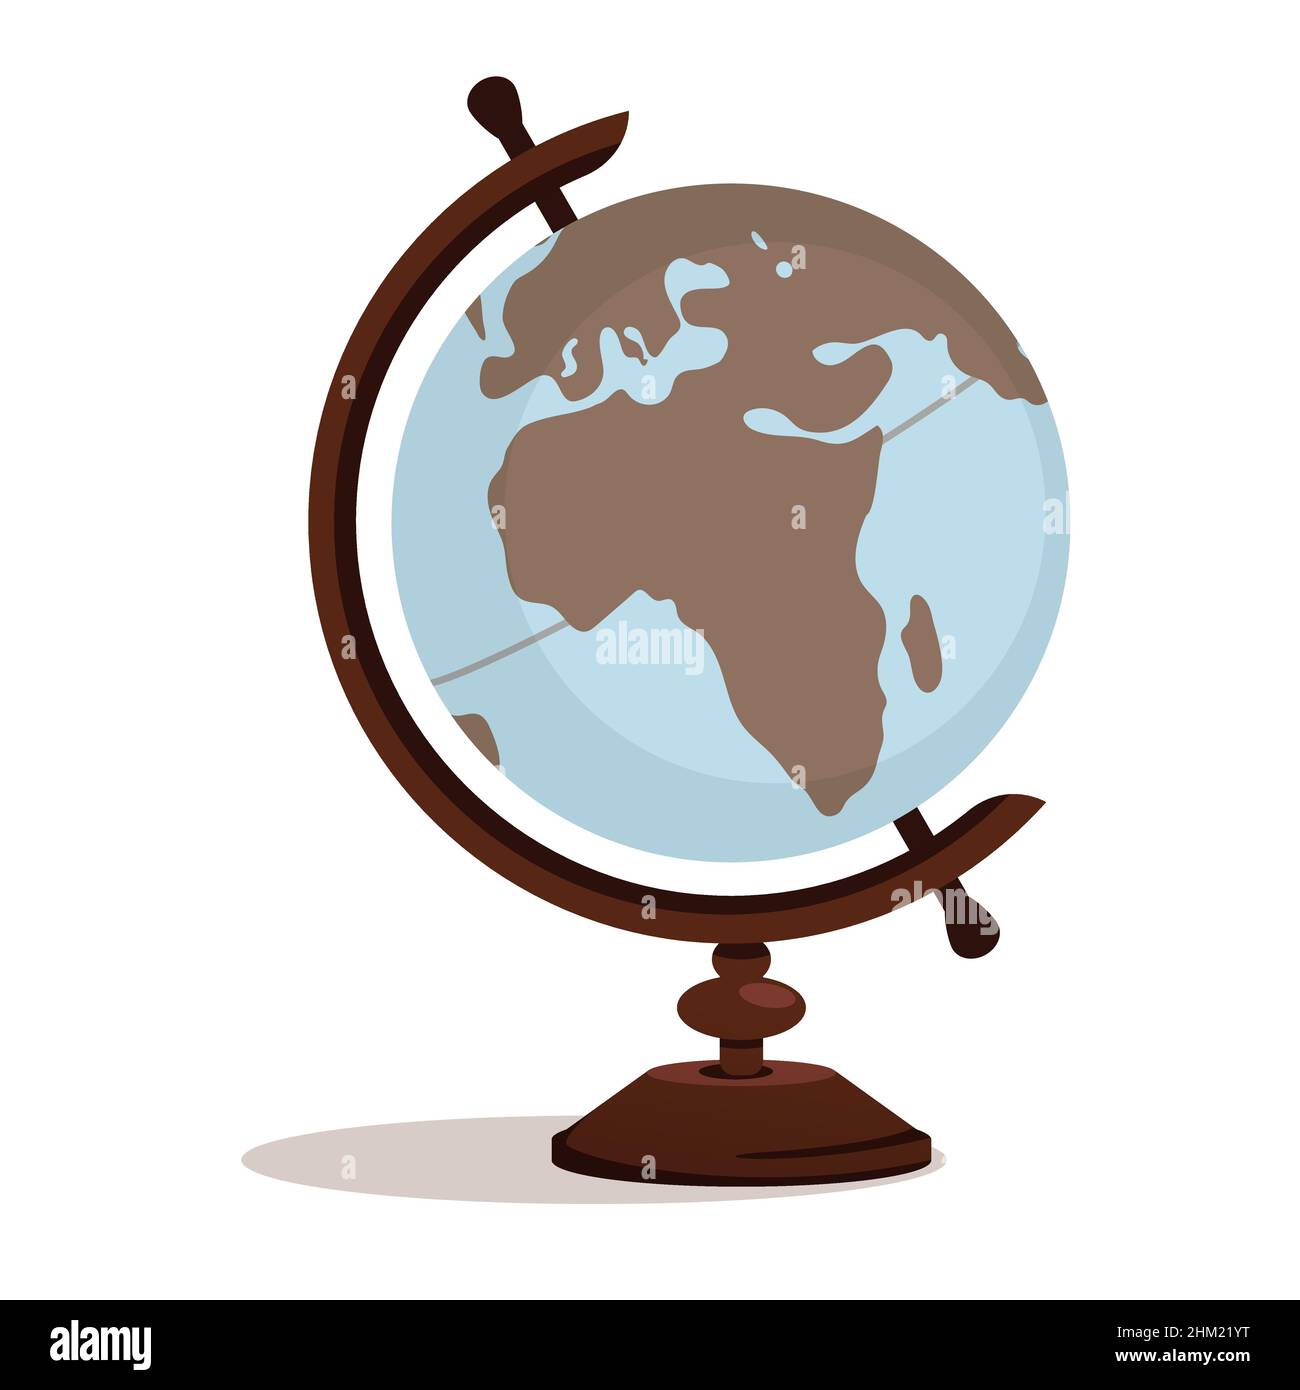 Vector cartoon style illustration of a globe Stock Vector